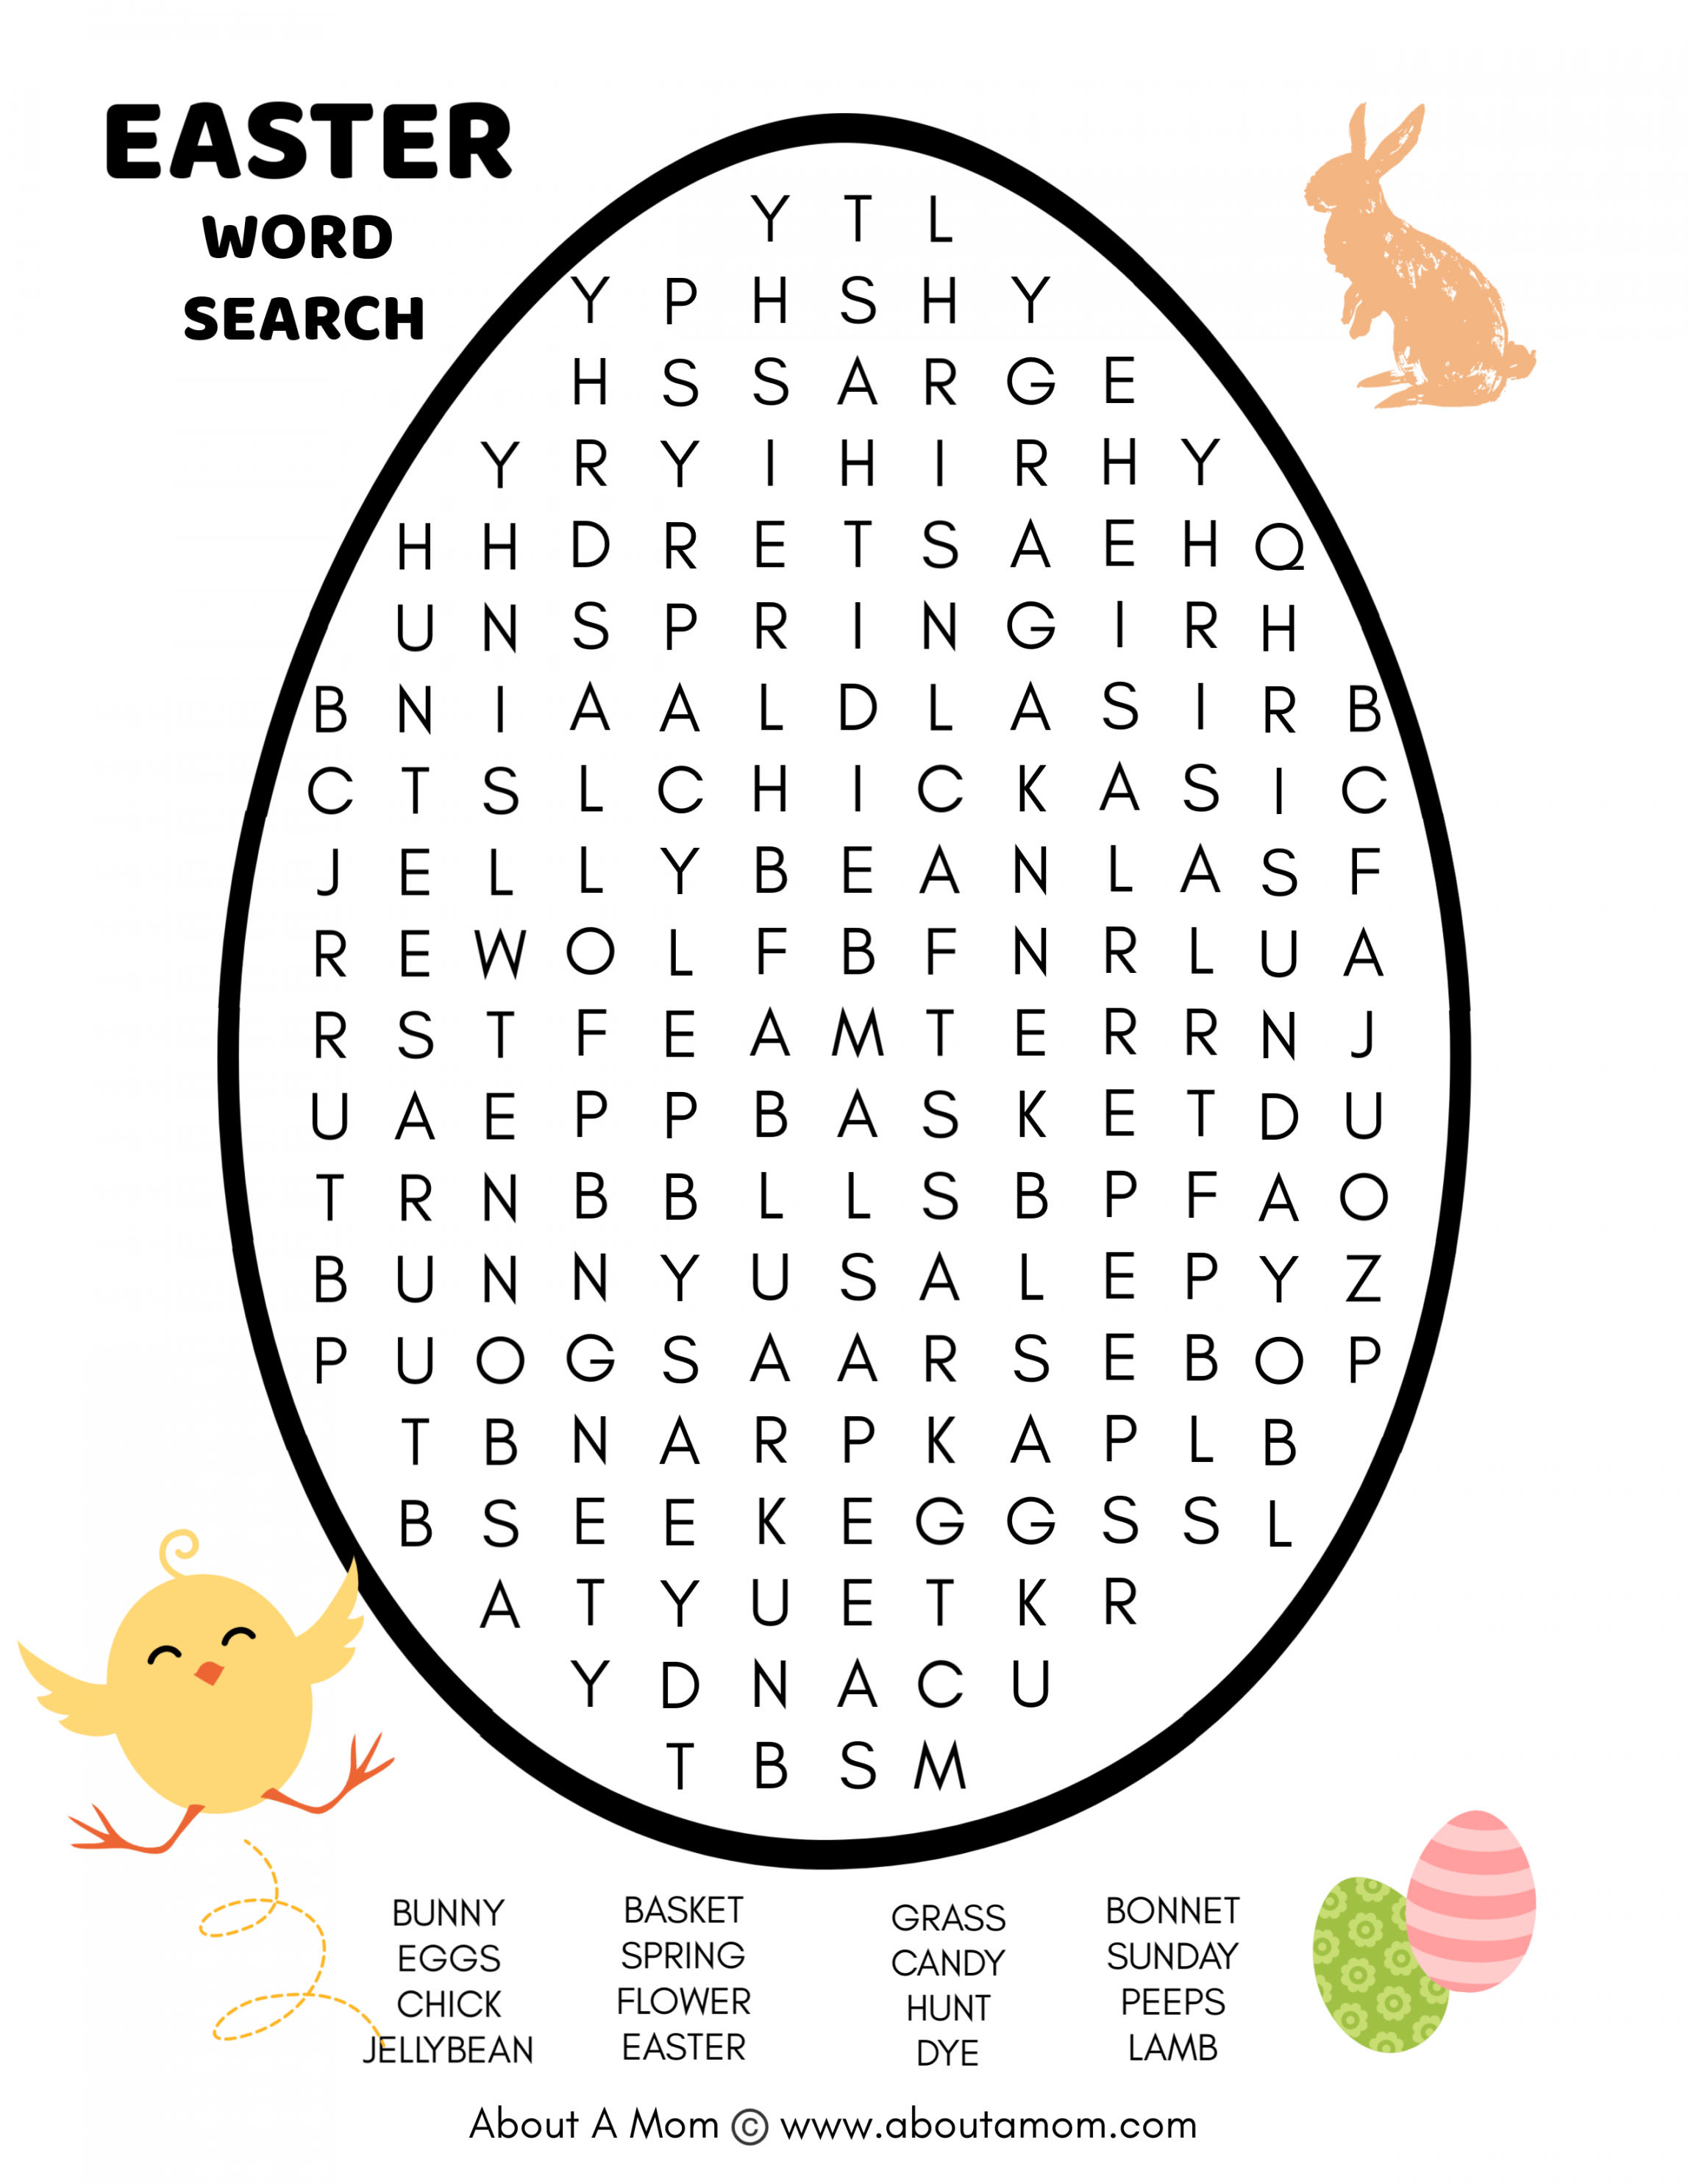 Easter Word Search Free Printable - Printable - Free Easter Word Search Printable - About a Mom